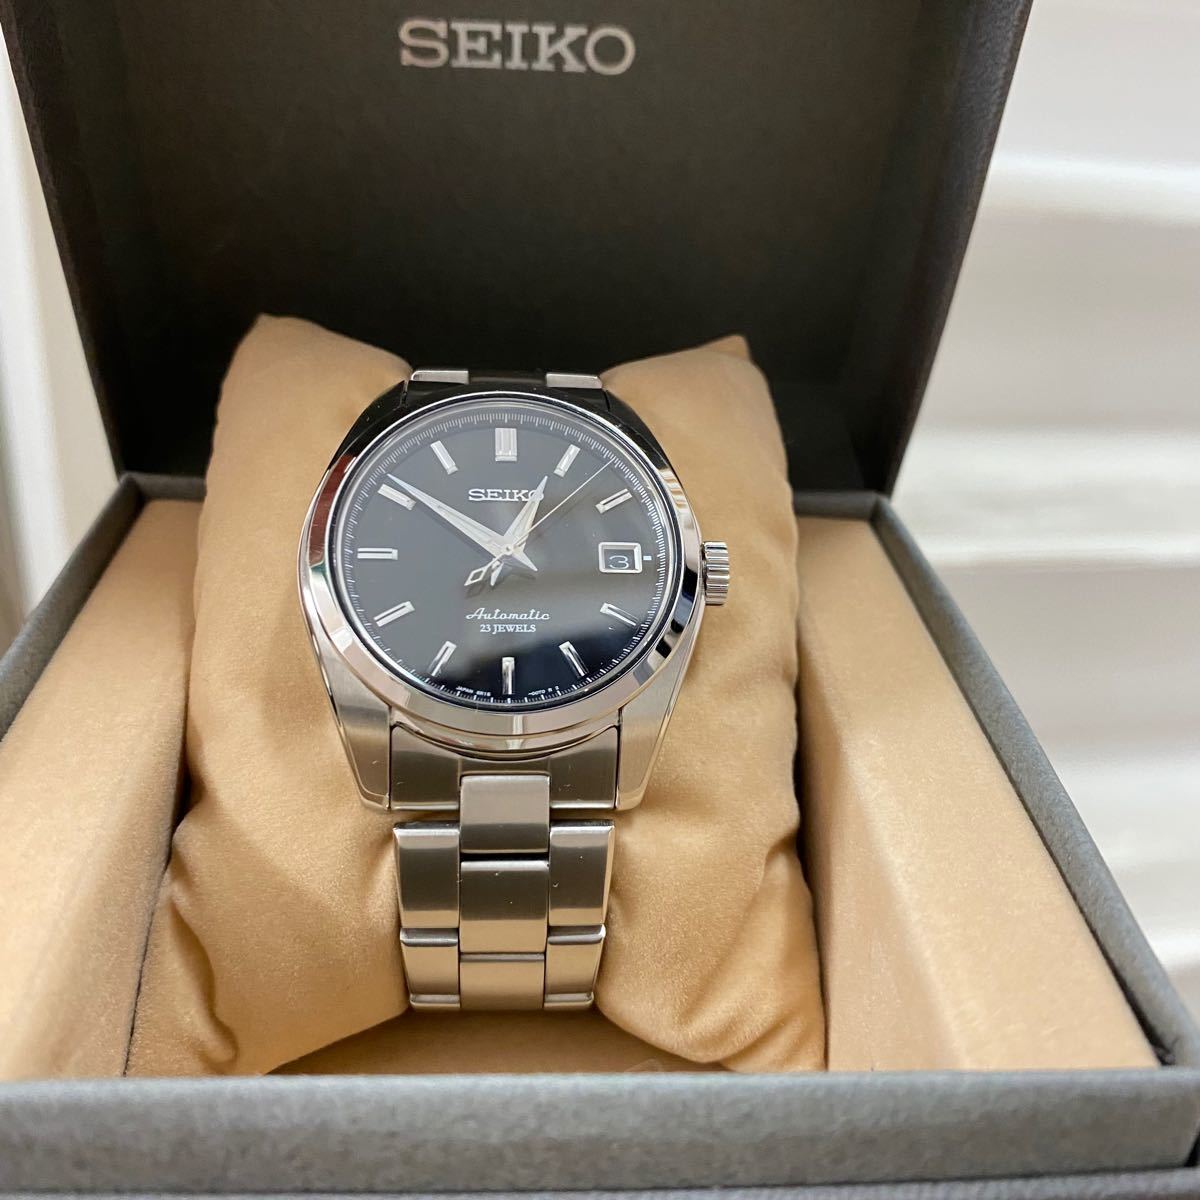 SEIKO 廃盤希少品 超美品 マニア必見 sarb033 入手困難 おまけ付 セイコー 自動巻 腕時計